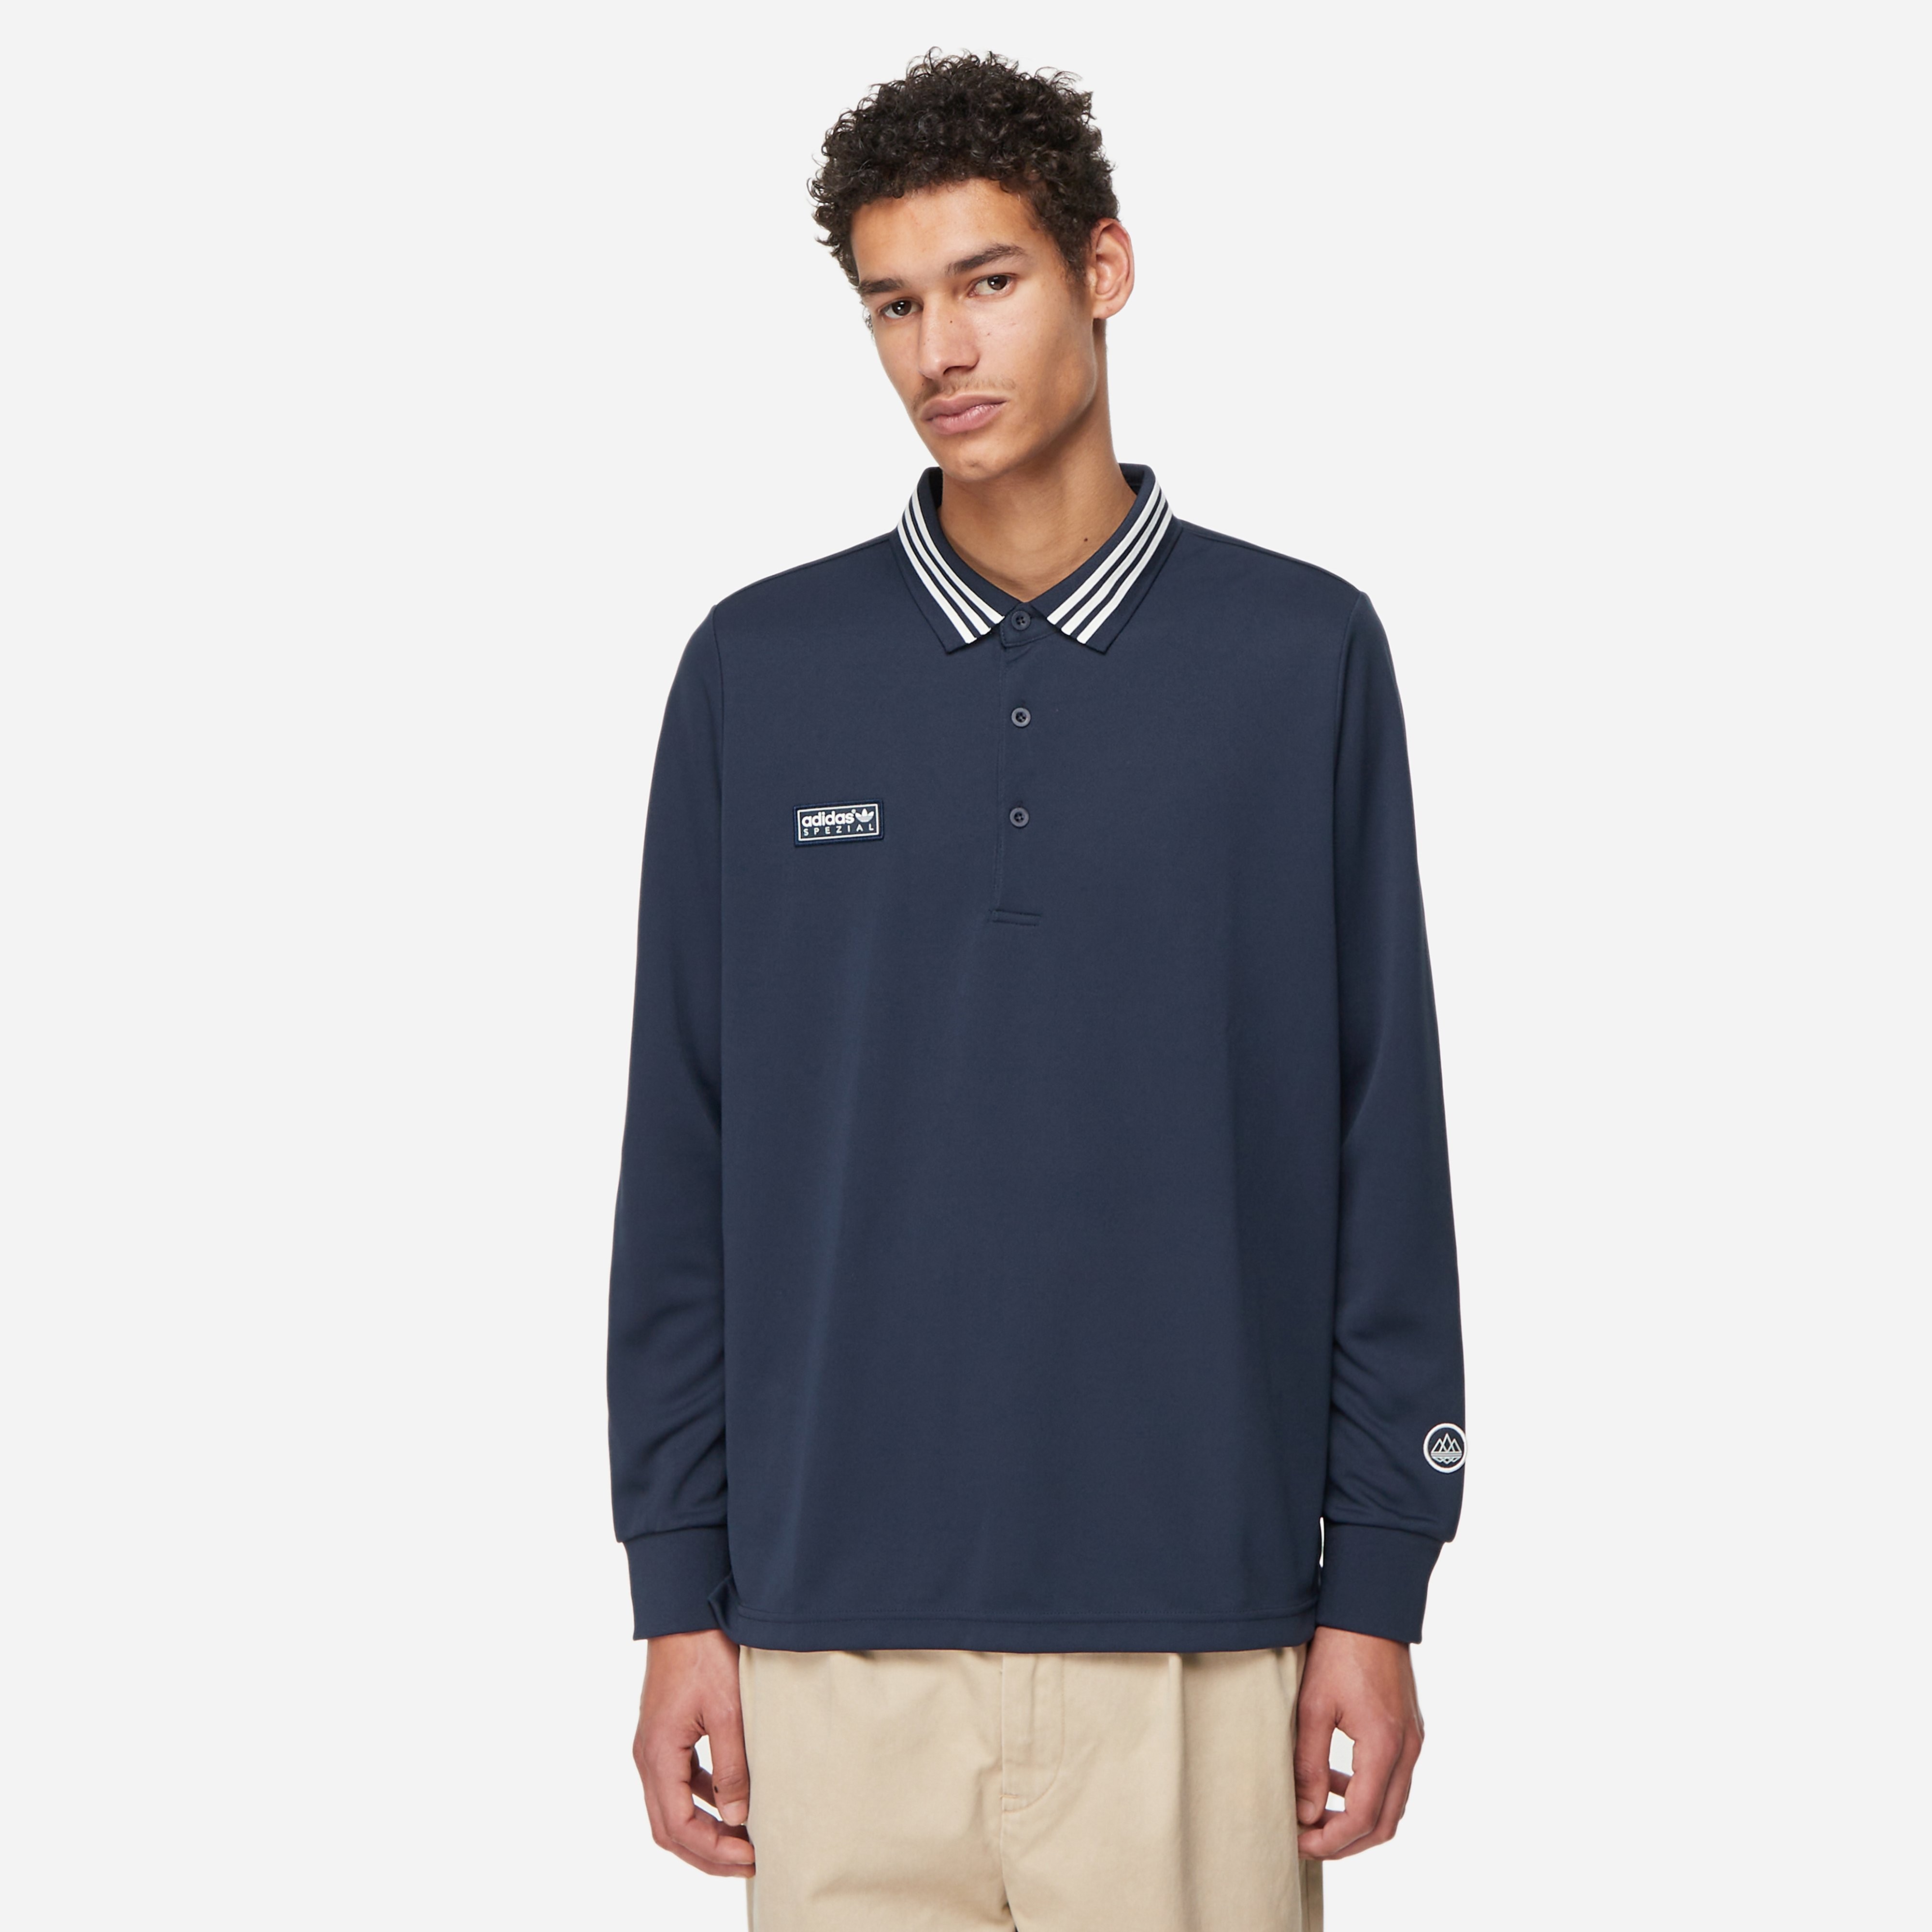 adidas SPEZIAL Long Sleeve Polo Shirt, Navy